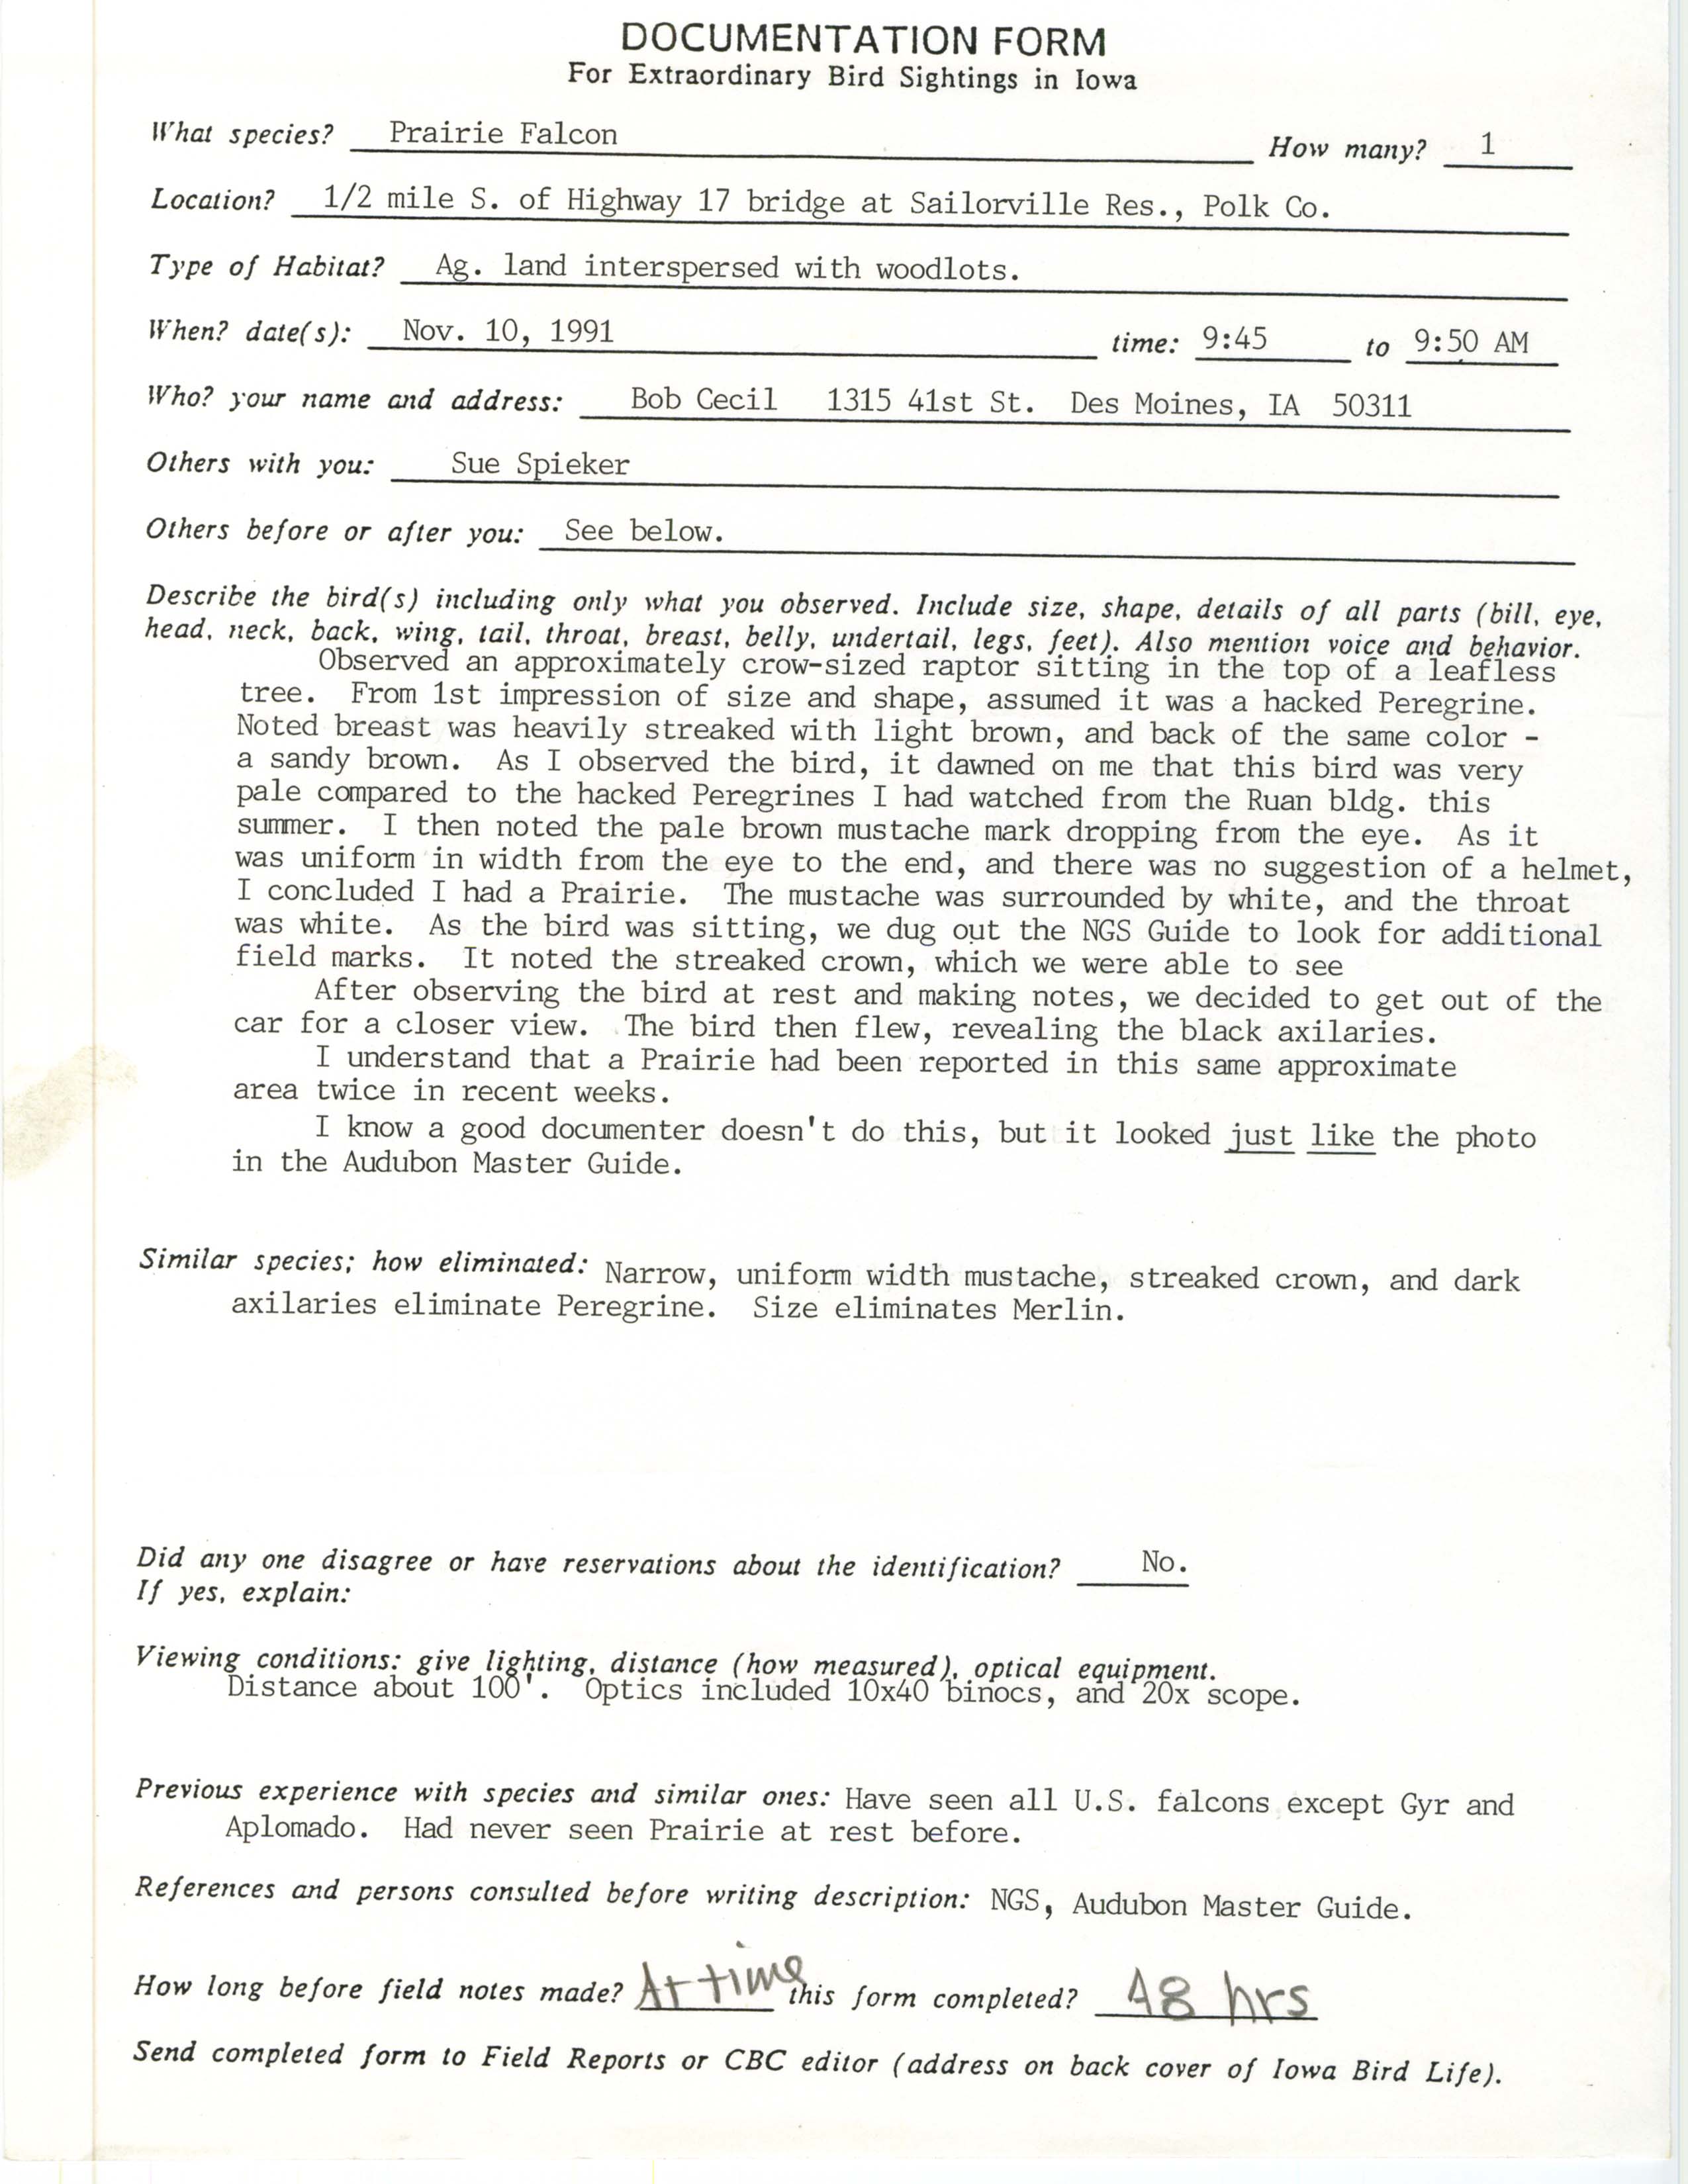 Rare bird documentation form for Prairie Falcon south of Saylorville Reservoir, 1991